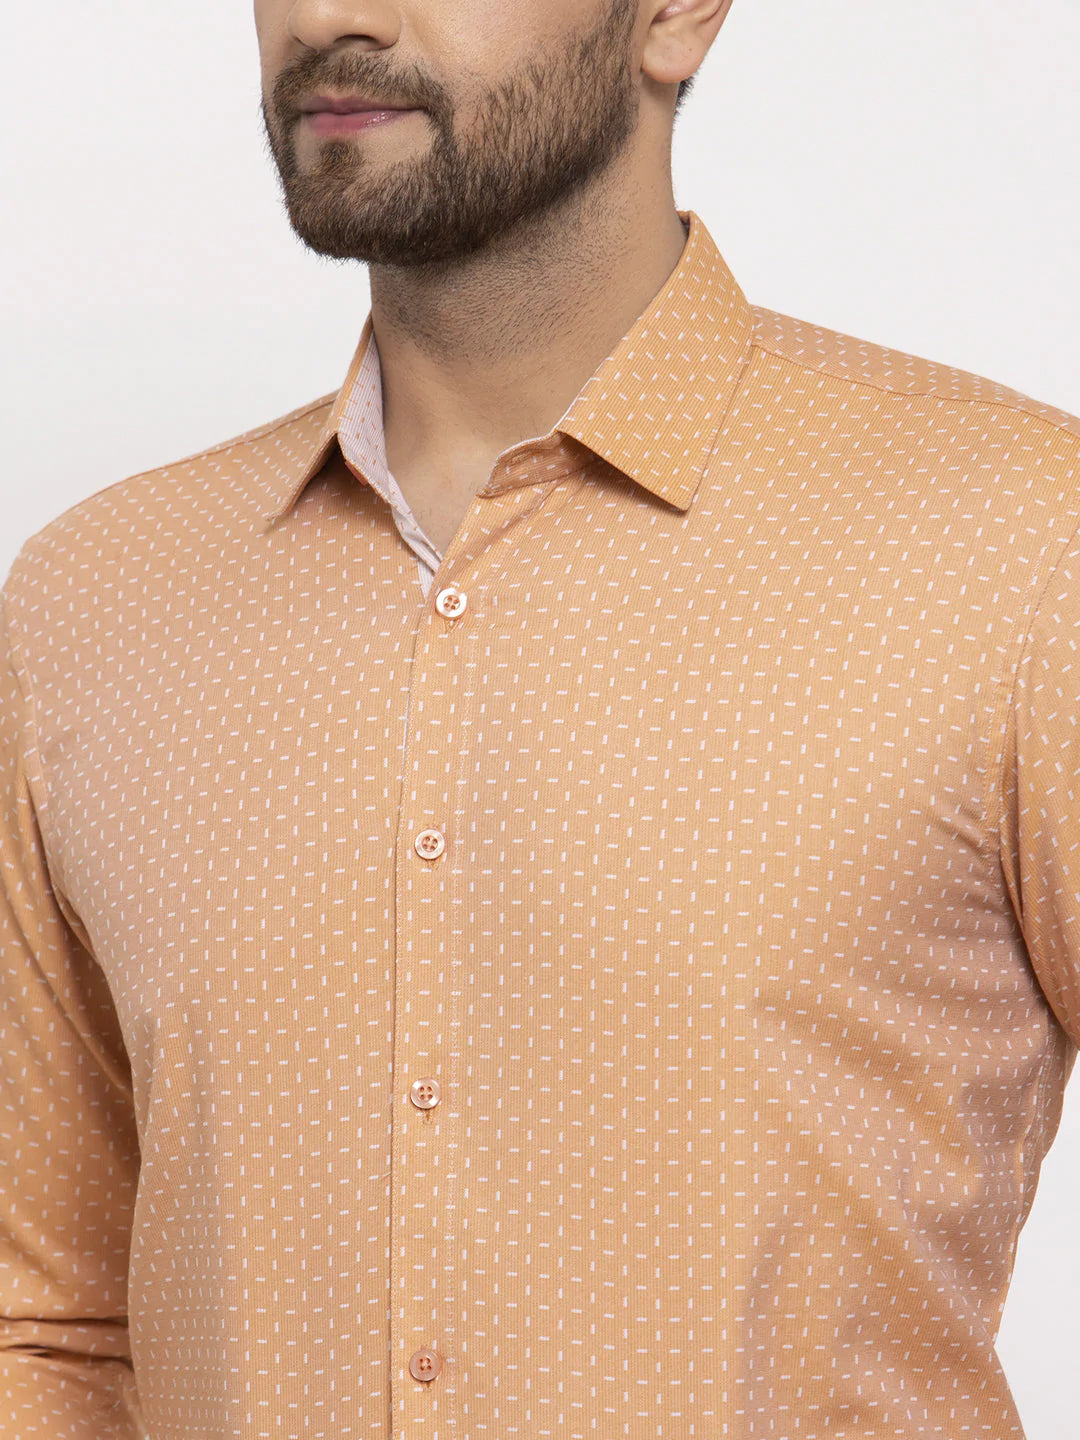 Jainish Brown Men's Cotton Printed Formal Shirt's ( SF 774Rust )